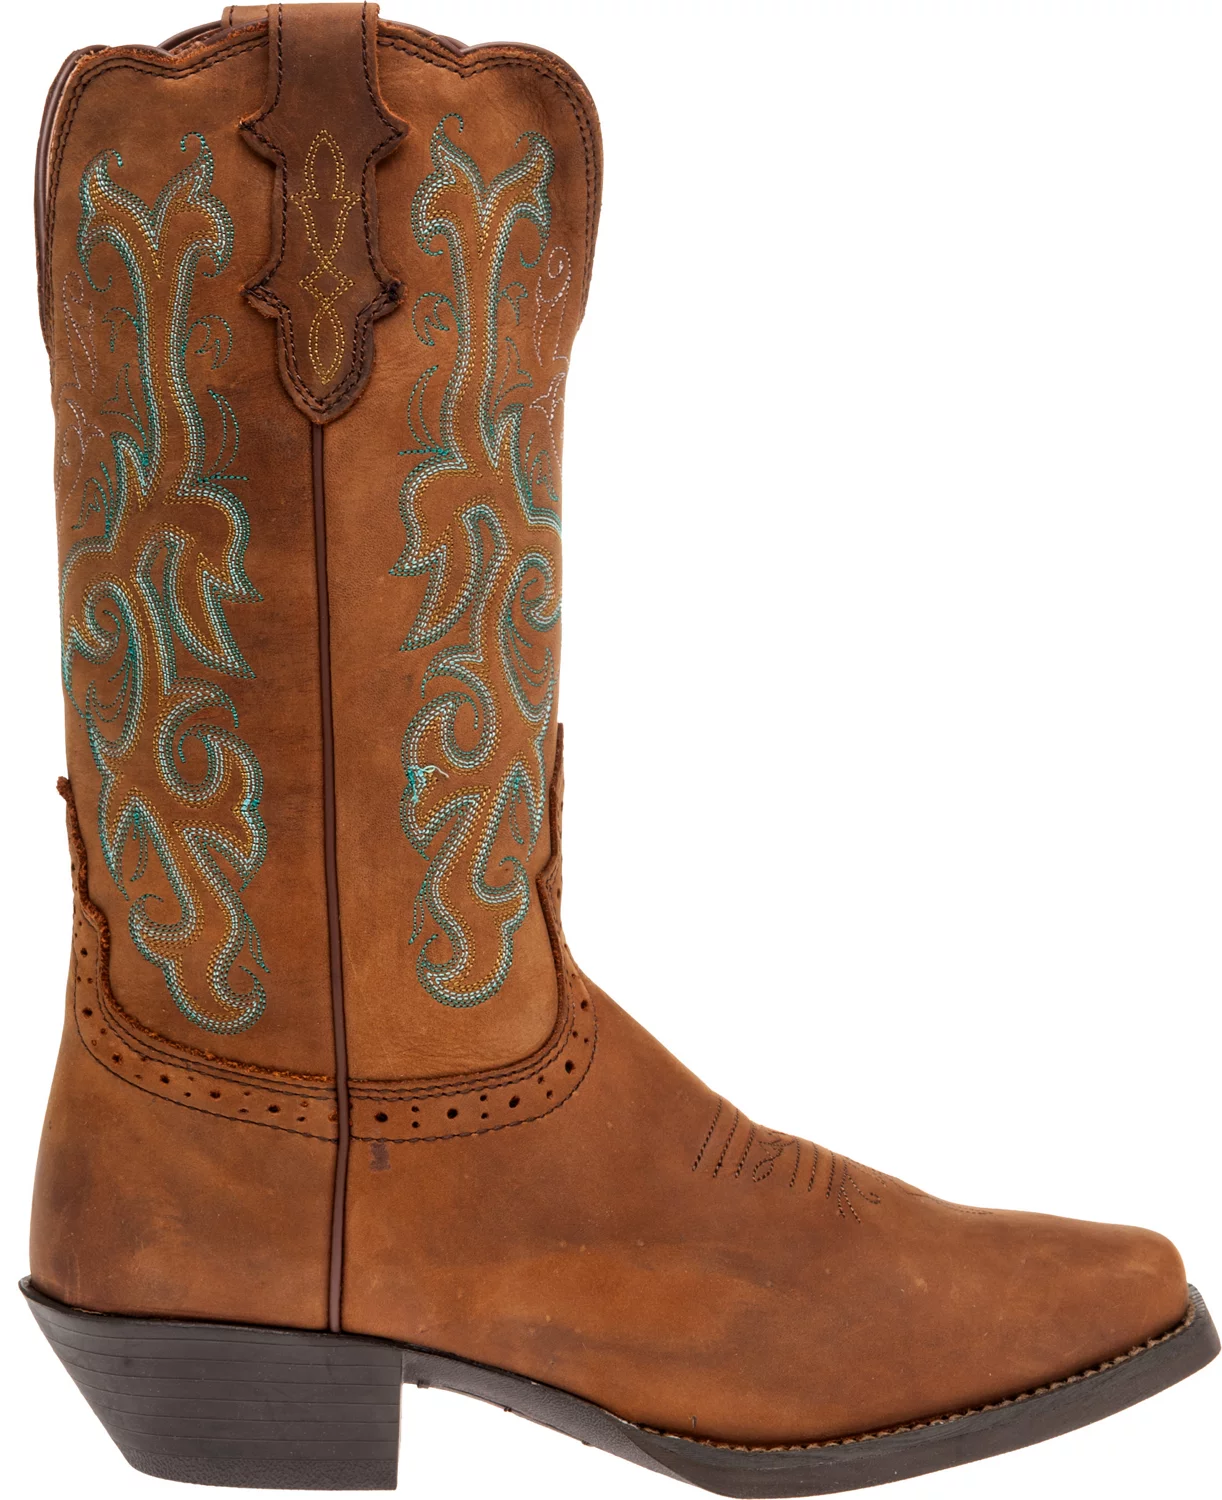 Women's Western Boots | Cowboy Boots For Women, Women's Cowboy Boots ...